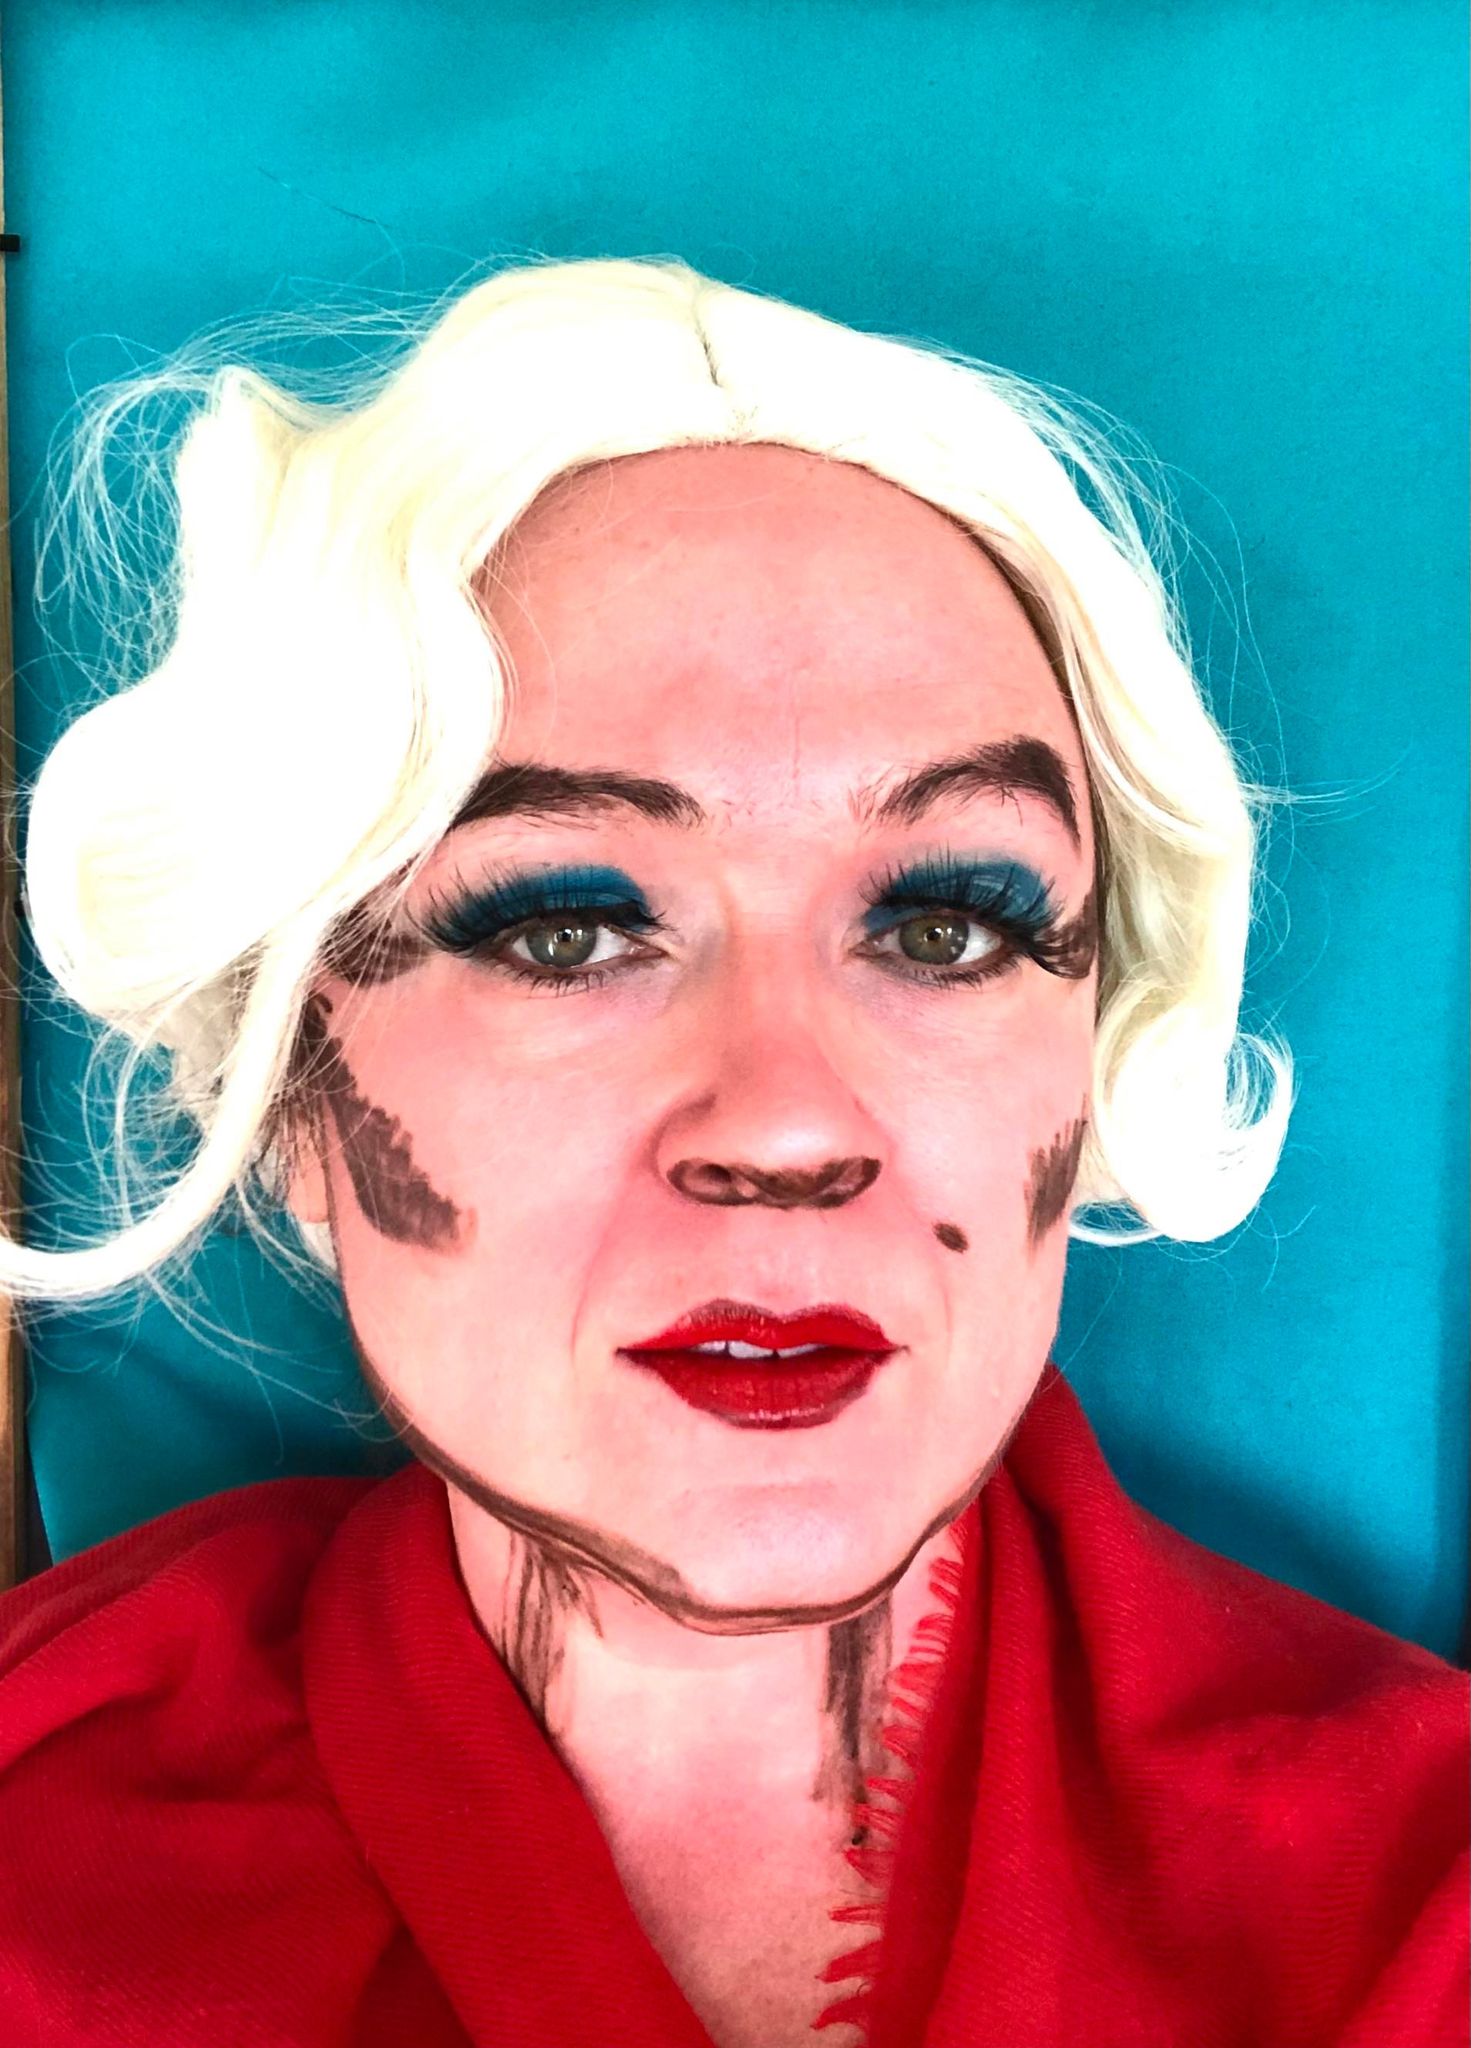 Halloween costume idea: Andy Warhol's Marilyn Monroe painting on silkscreen